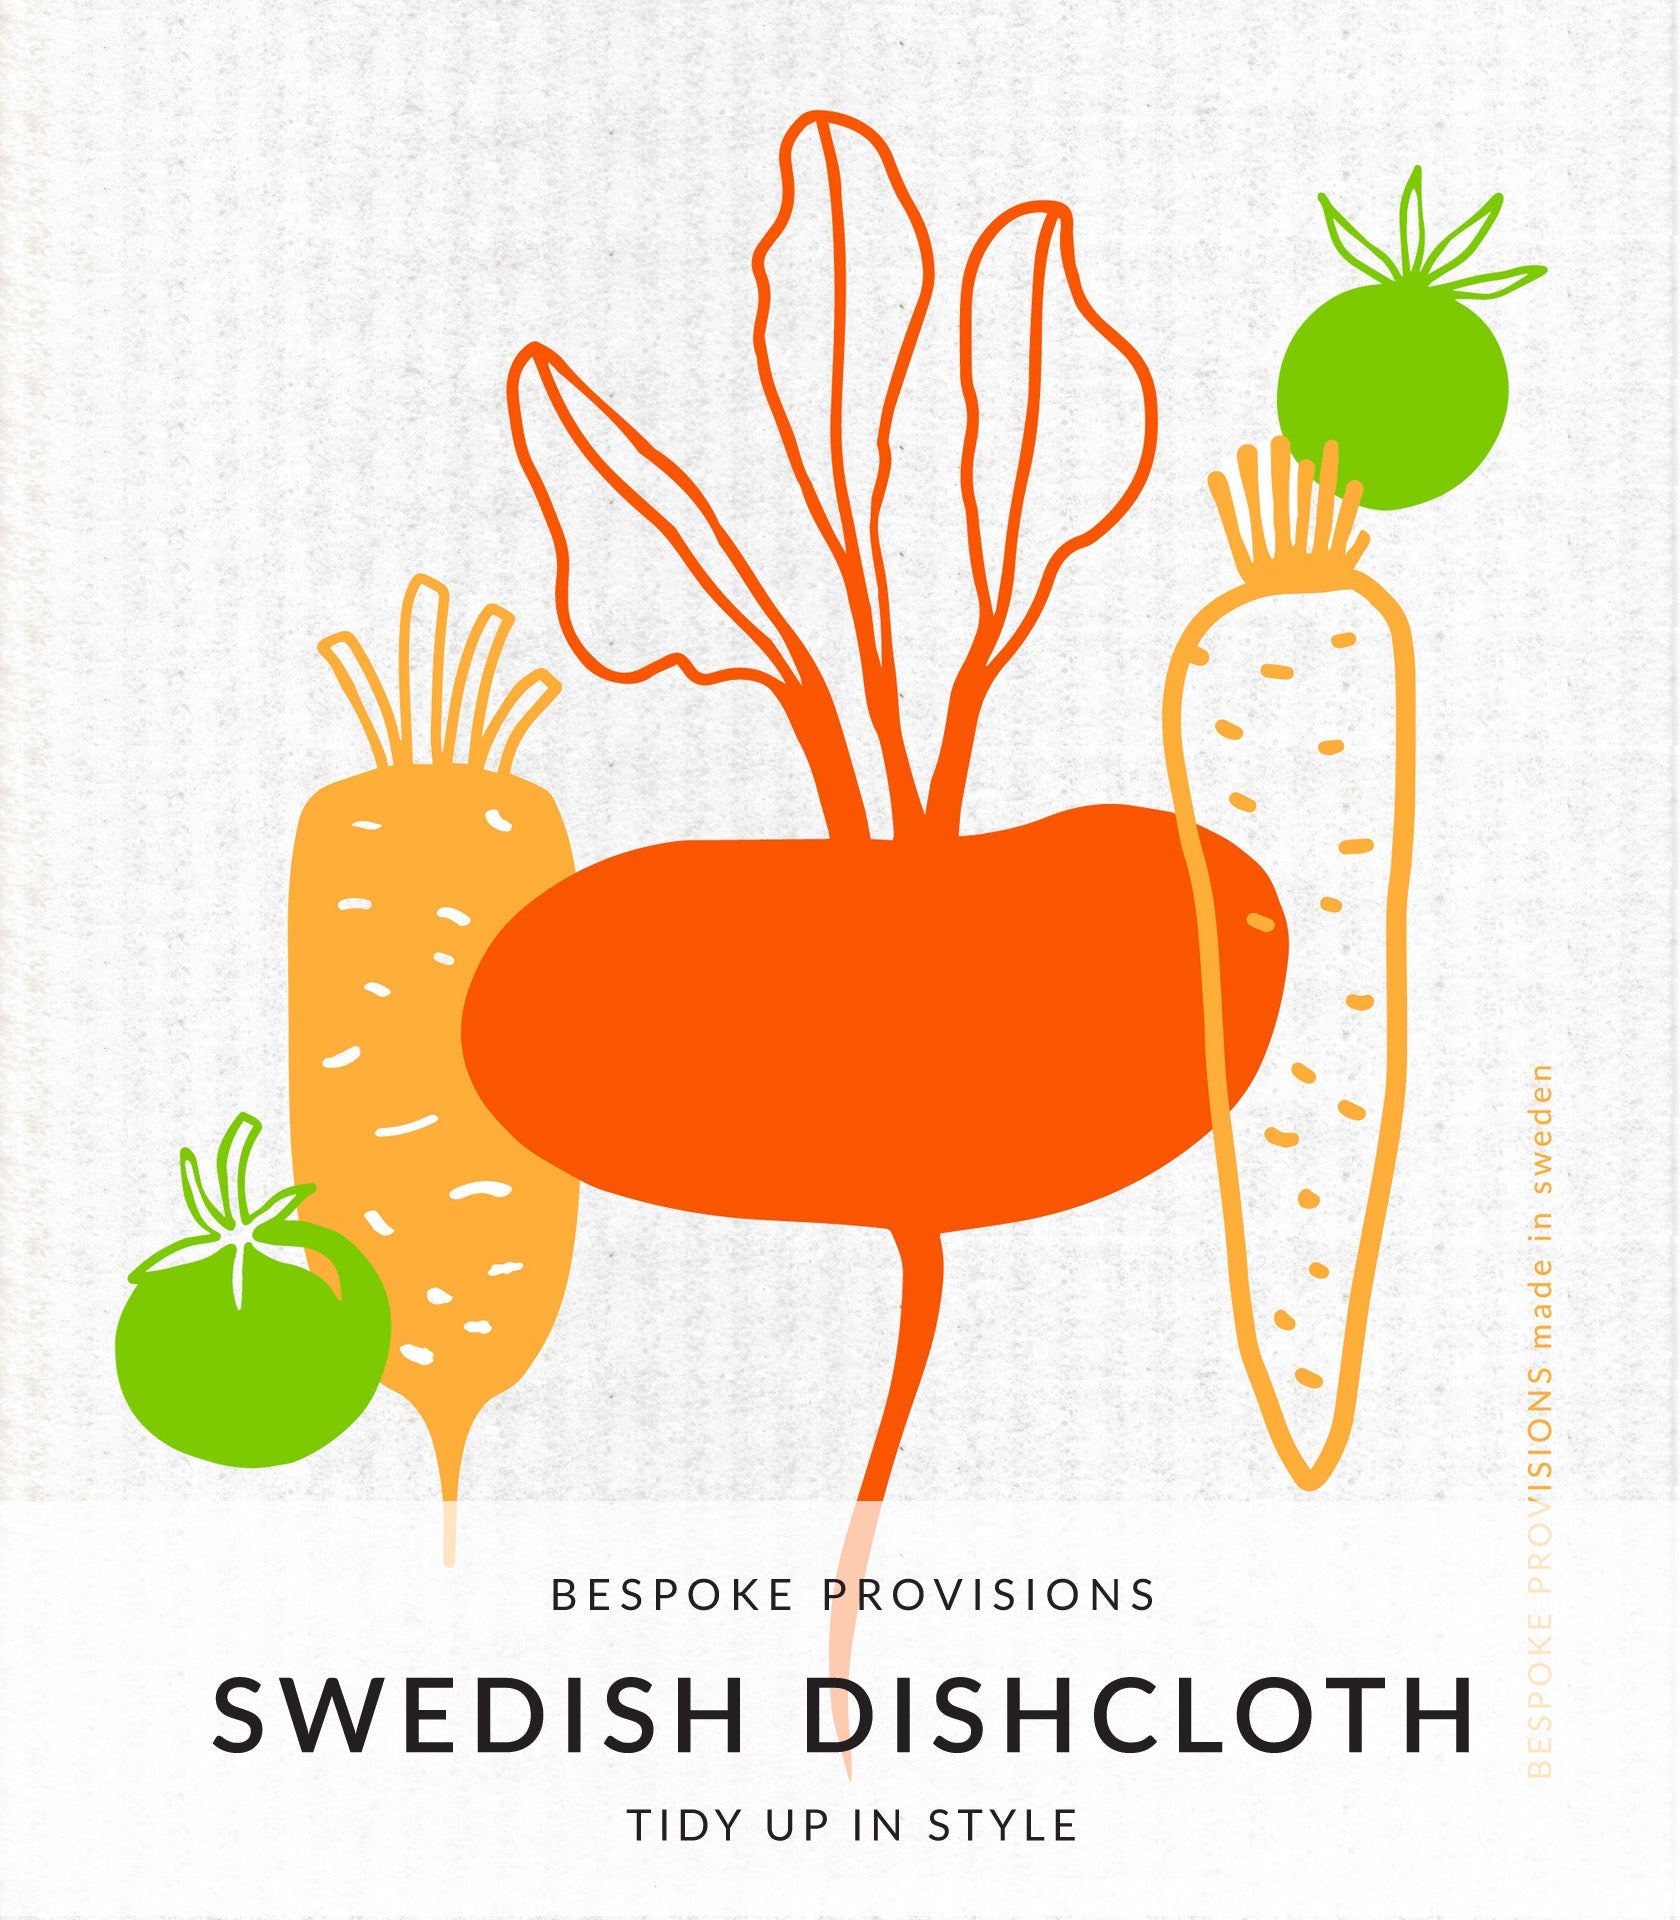 Veggies Swedish Dishcloth - BESPOKE PROVISIONS